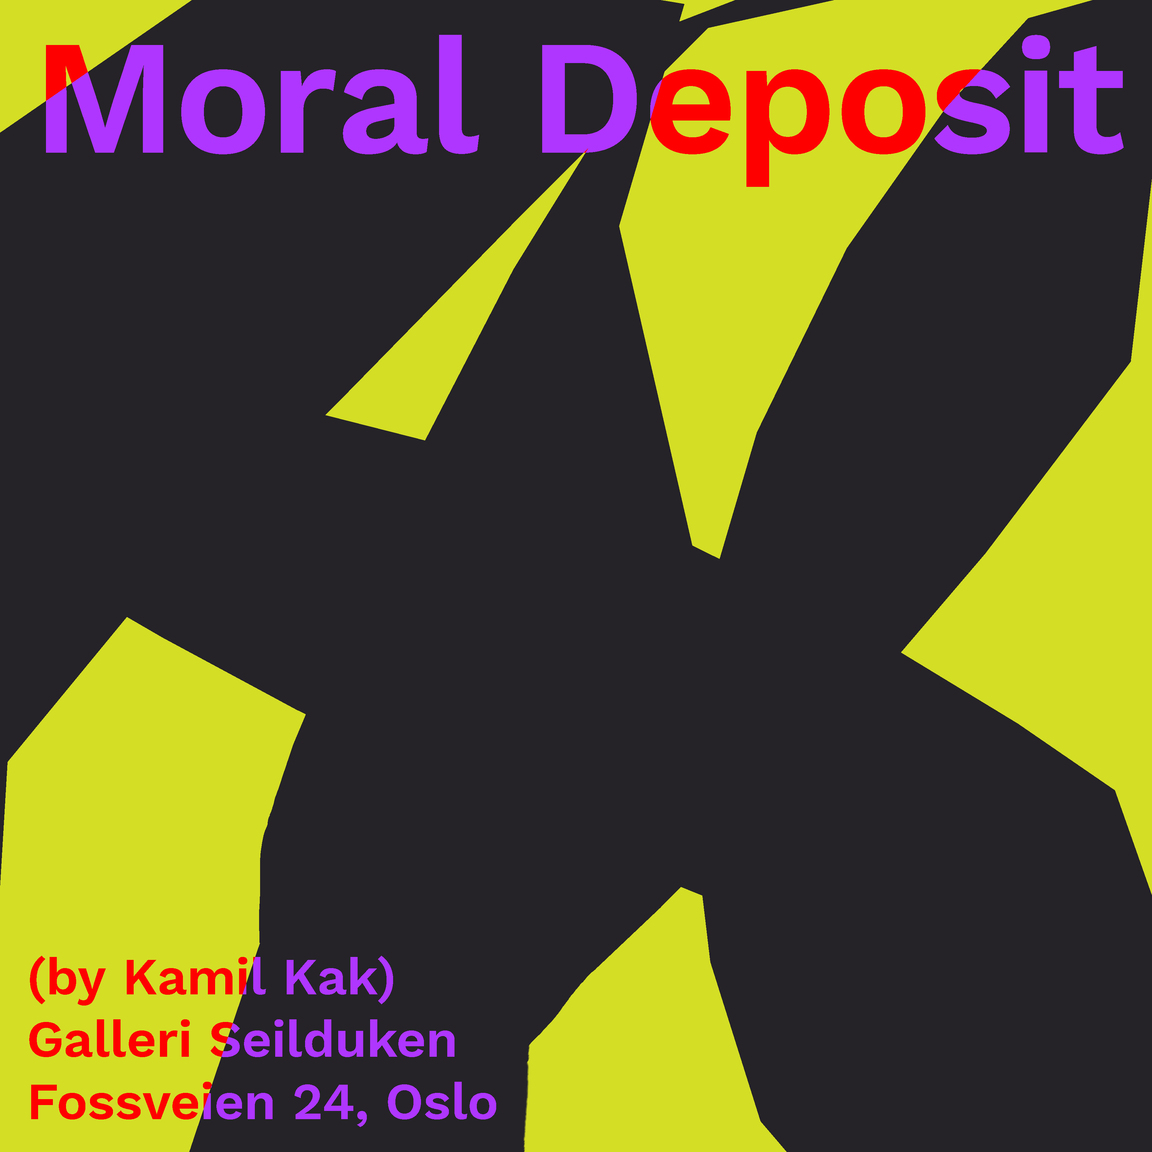 Moral deposit